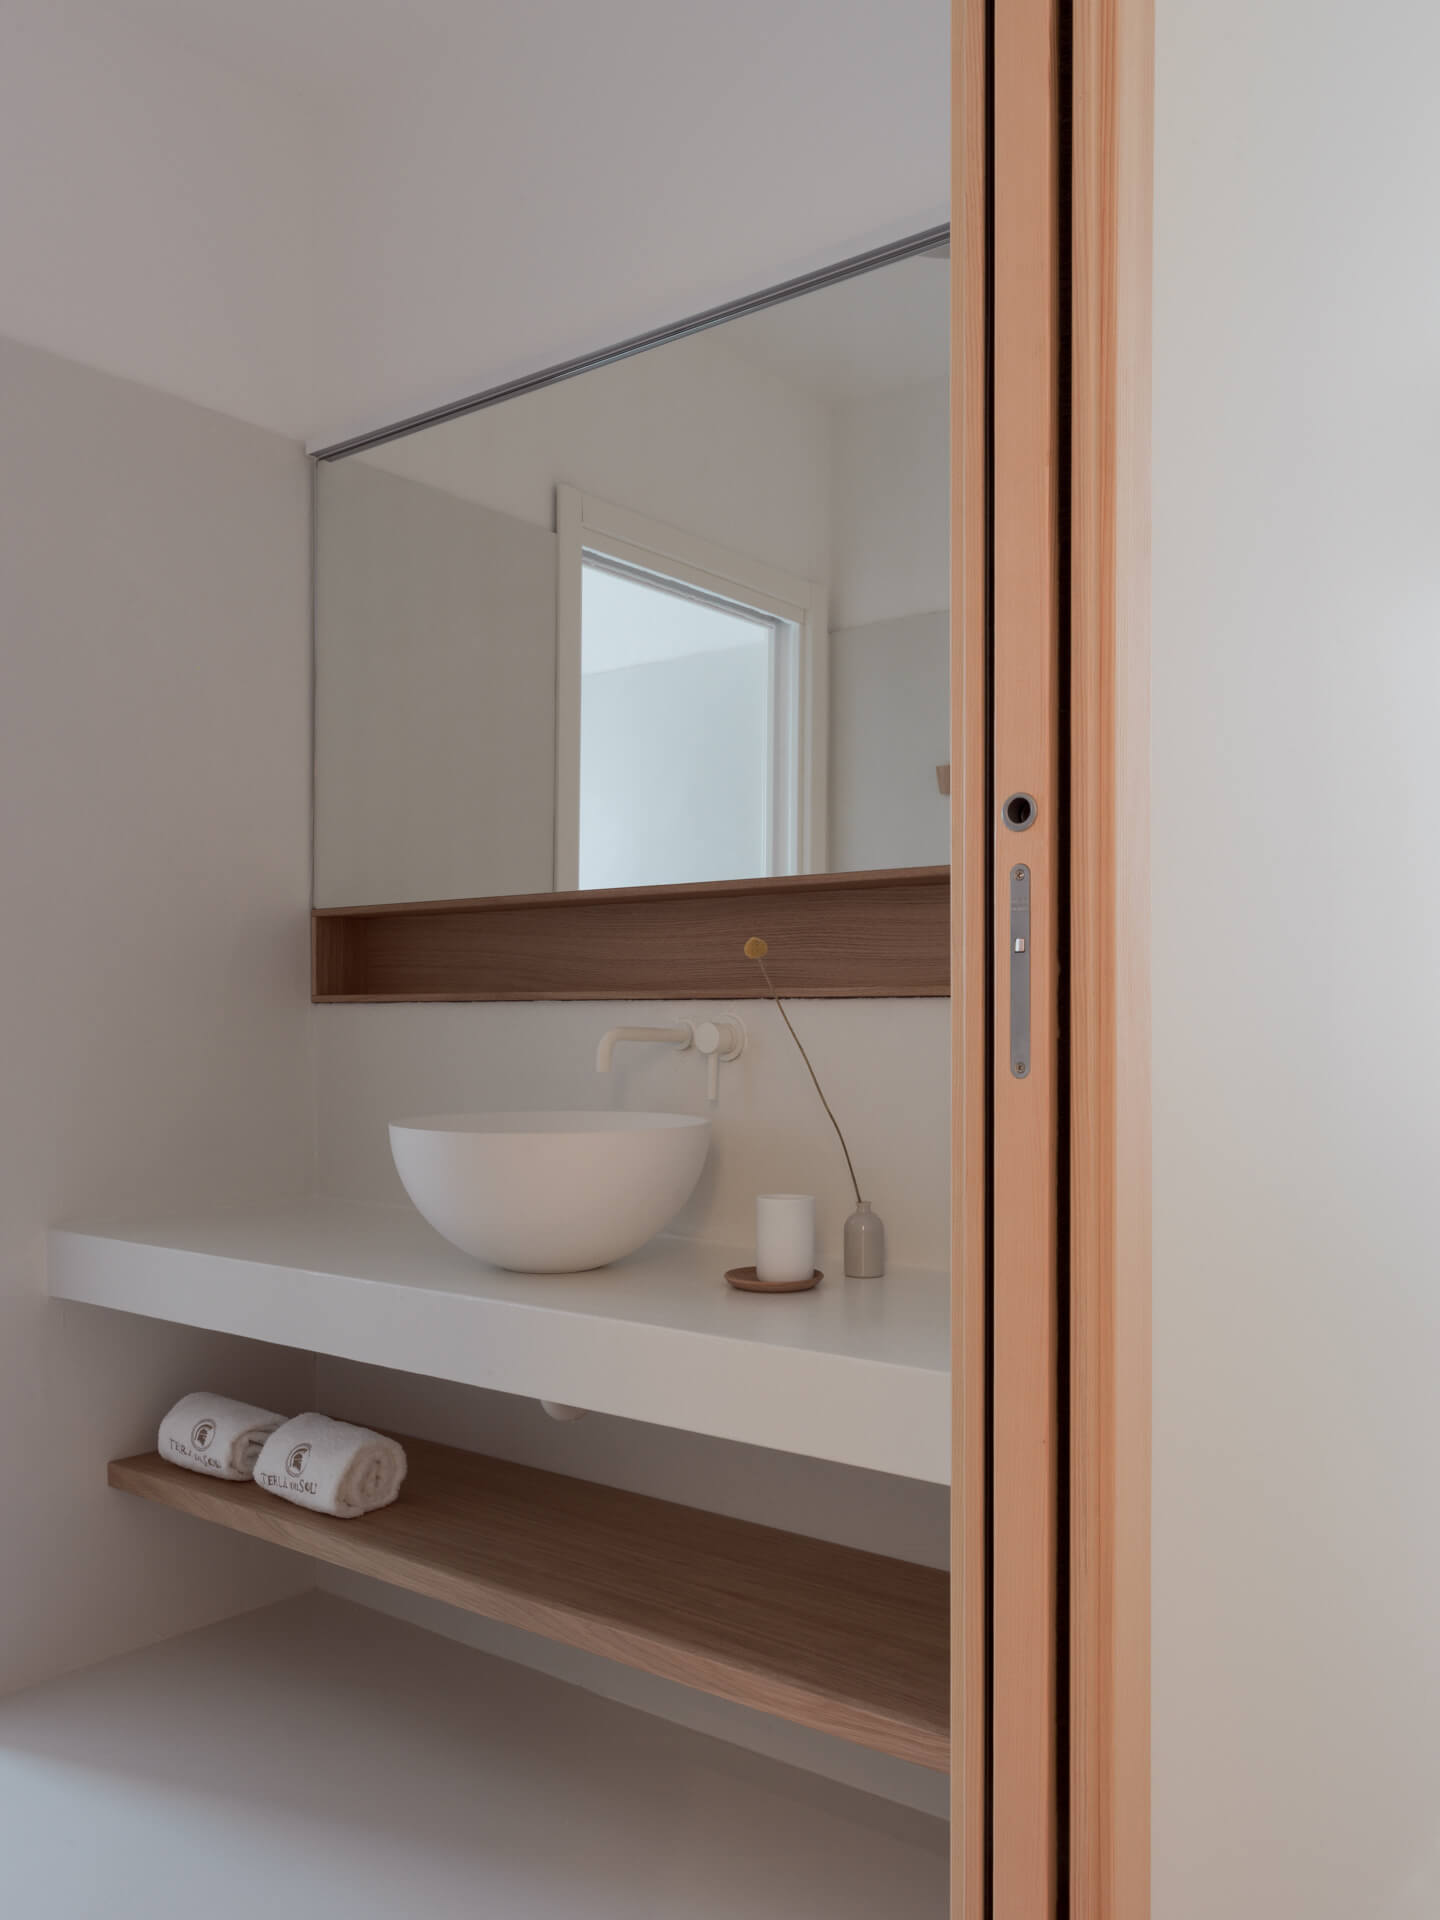 Terra del Sole suites - Bathroom Design